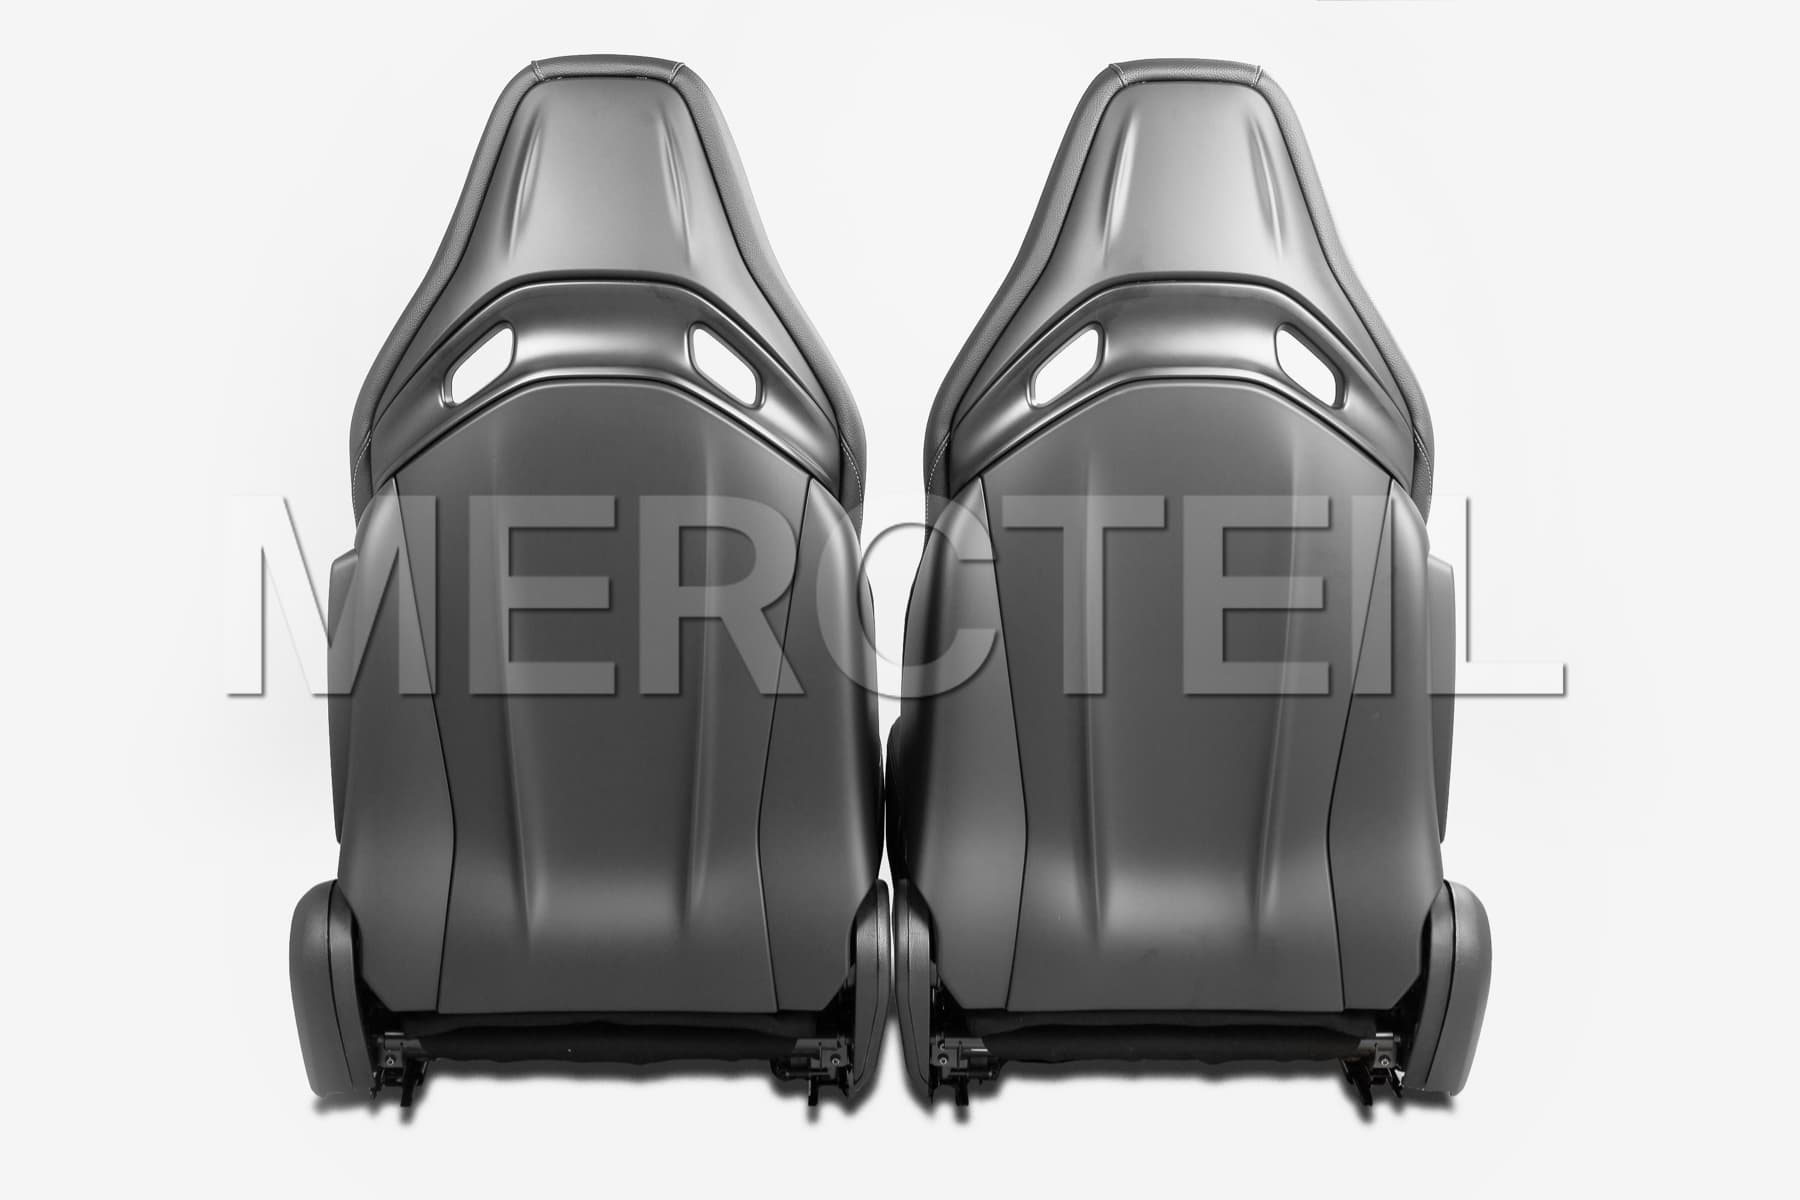 AMG Sport Leder/Alcantara Sitze für C-Klasse